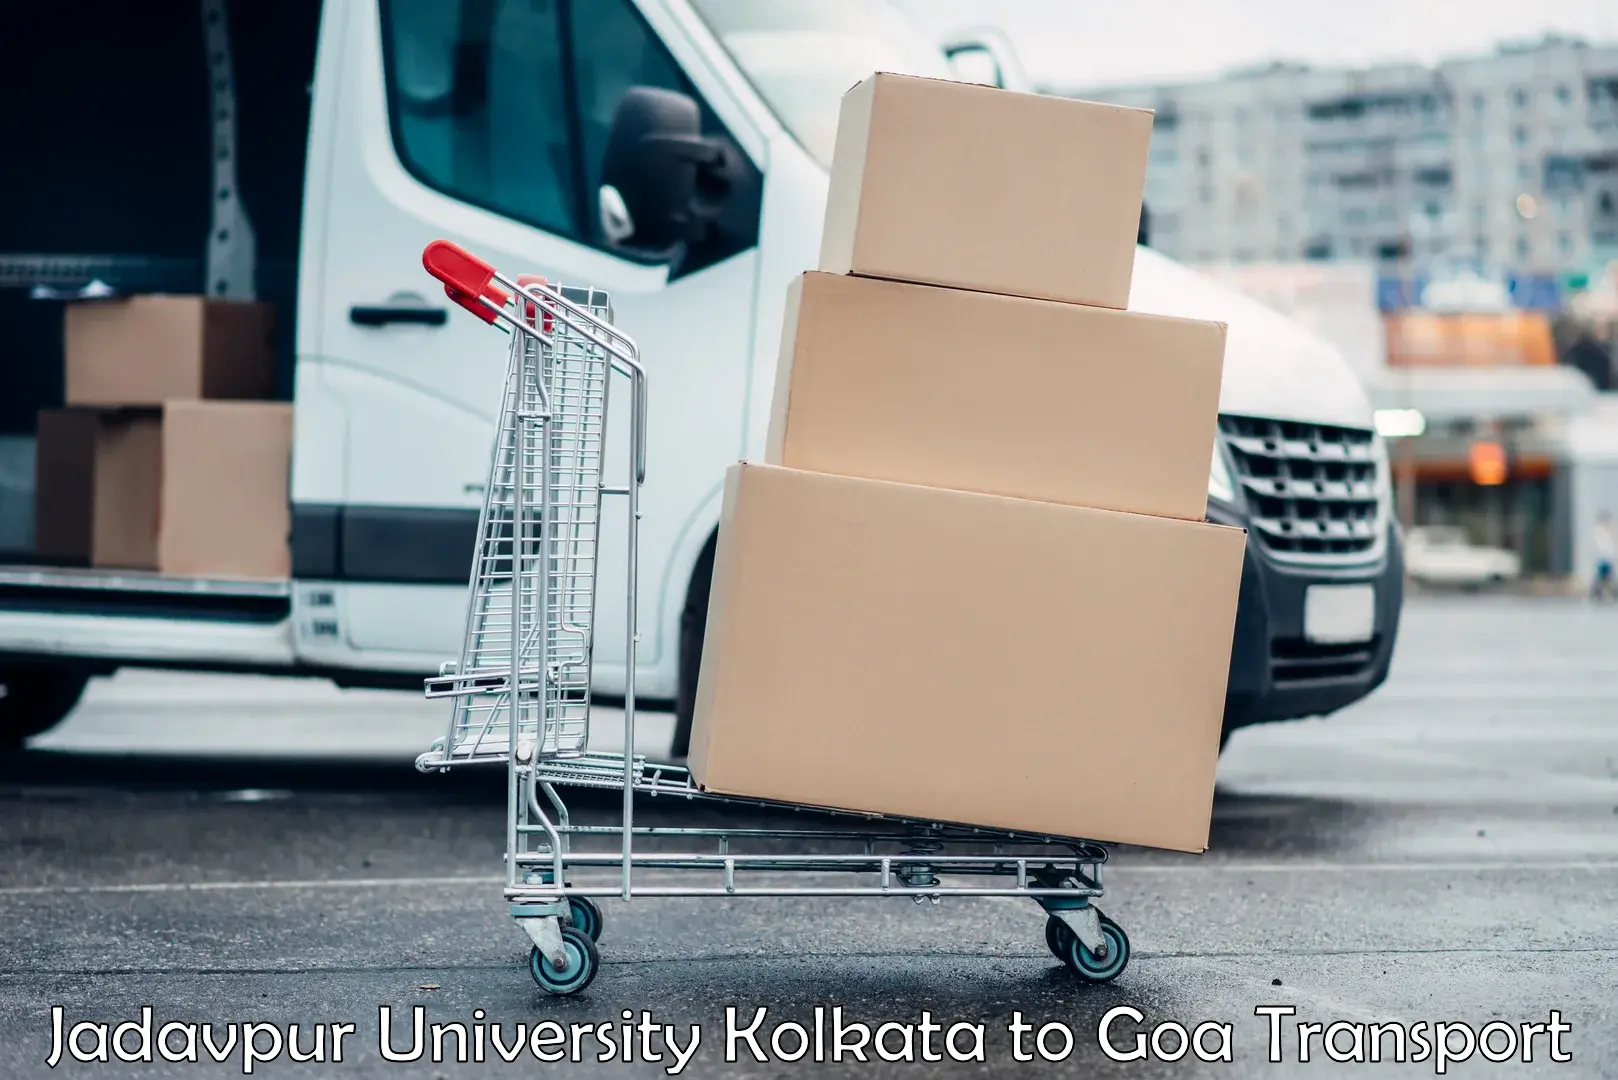 Truck transport companies in India Jadavpur University Kolkata to Ponda